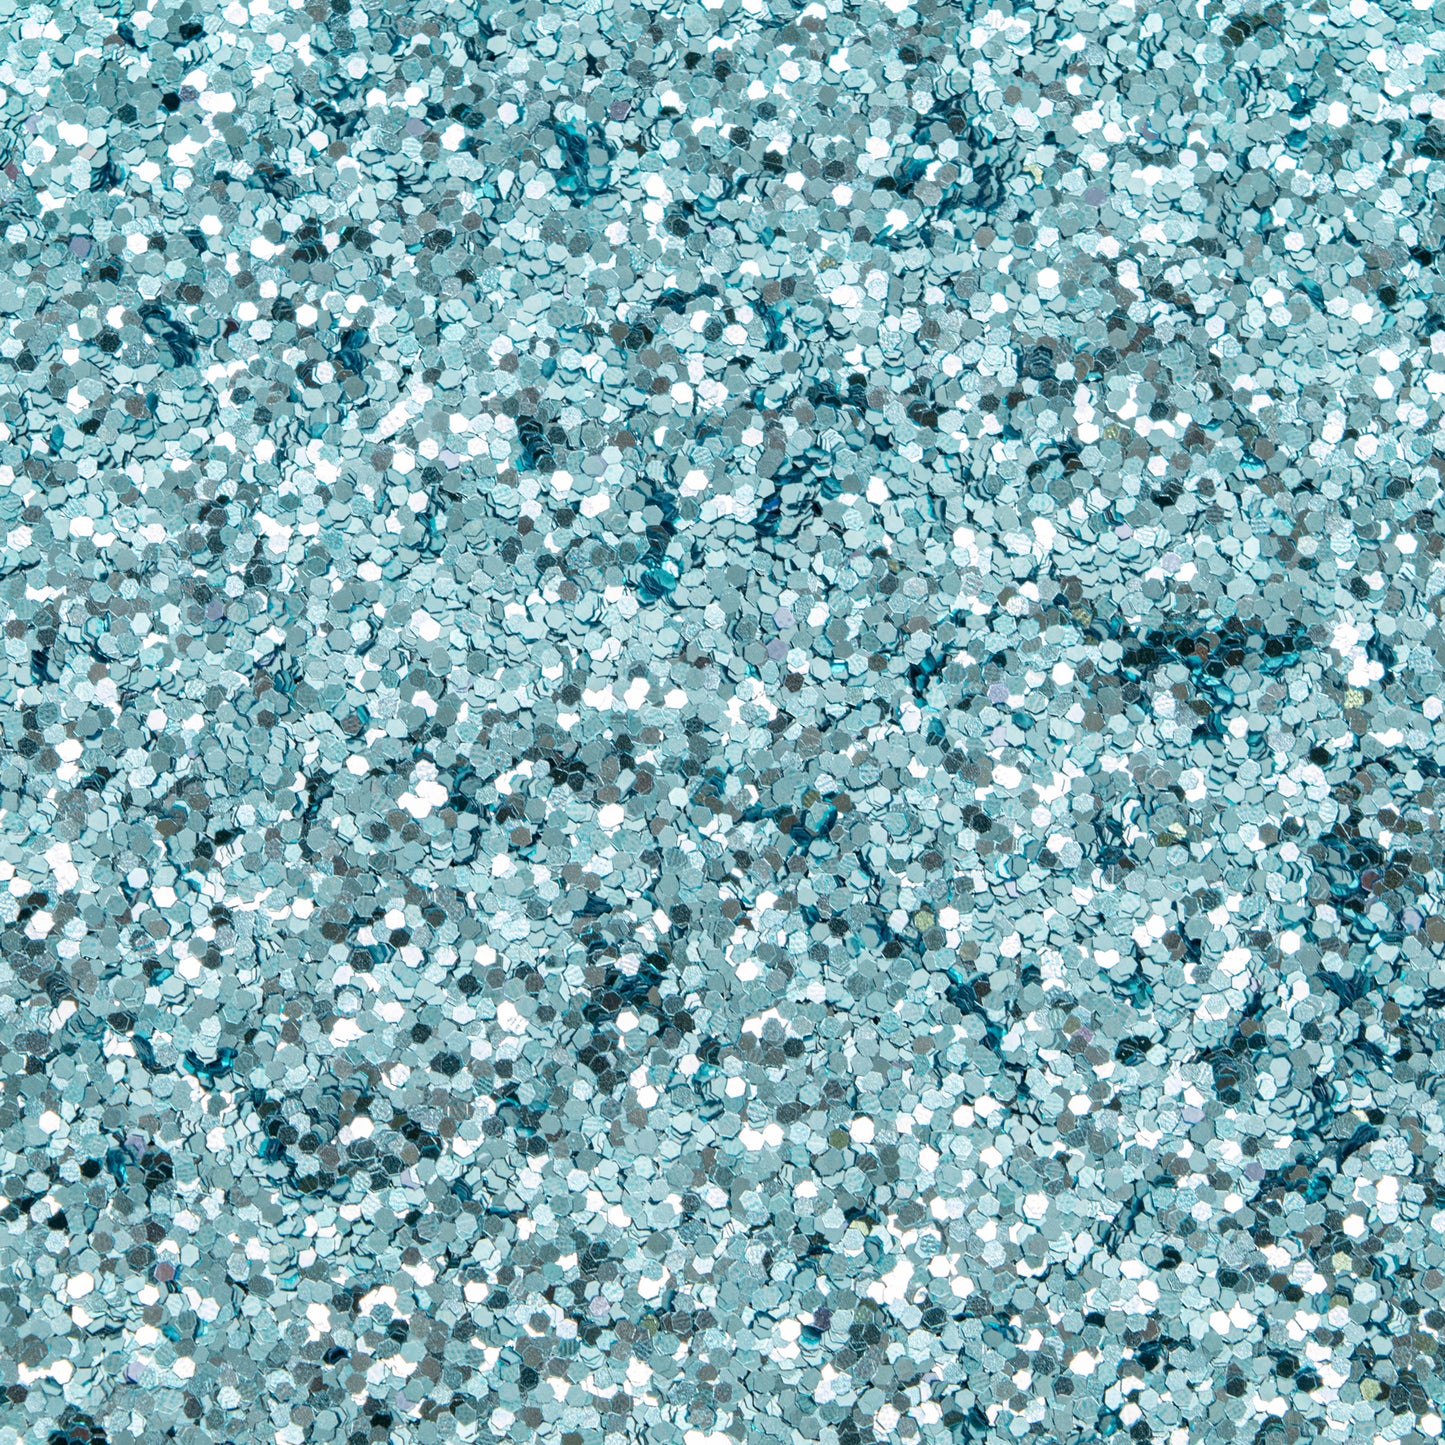 Glitter Big Sky Blue 1kg BULK - Default (GLITBSKY1KG)